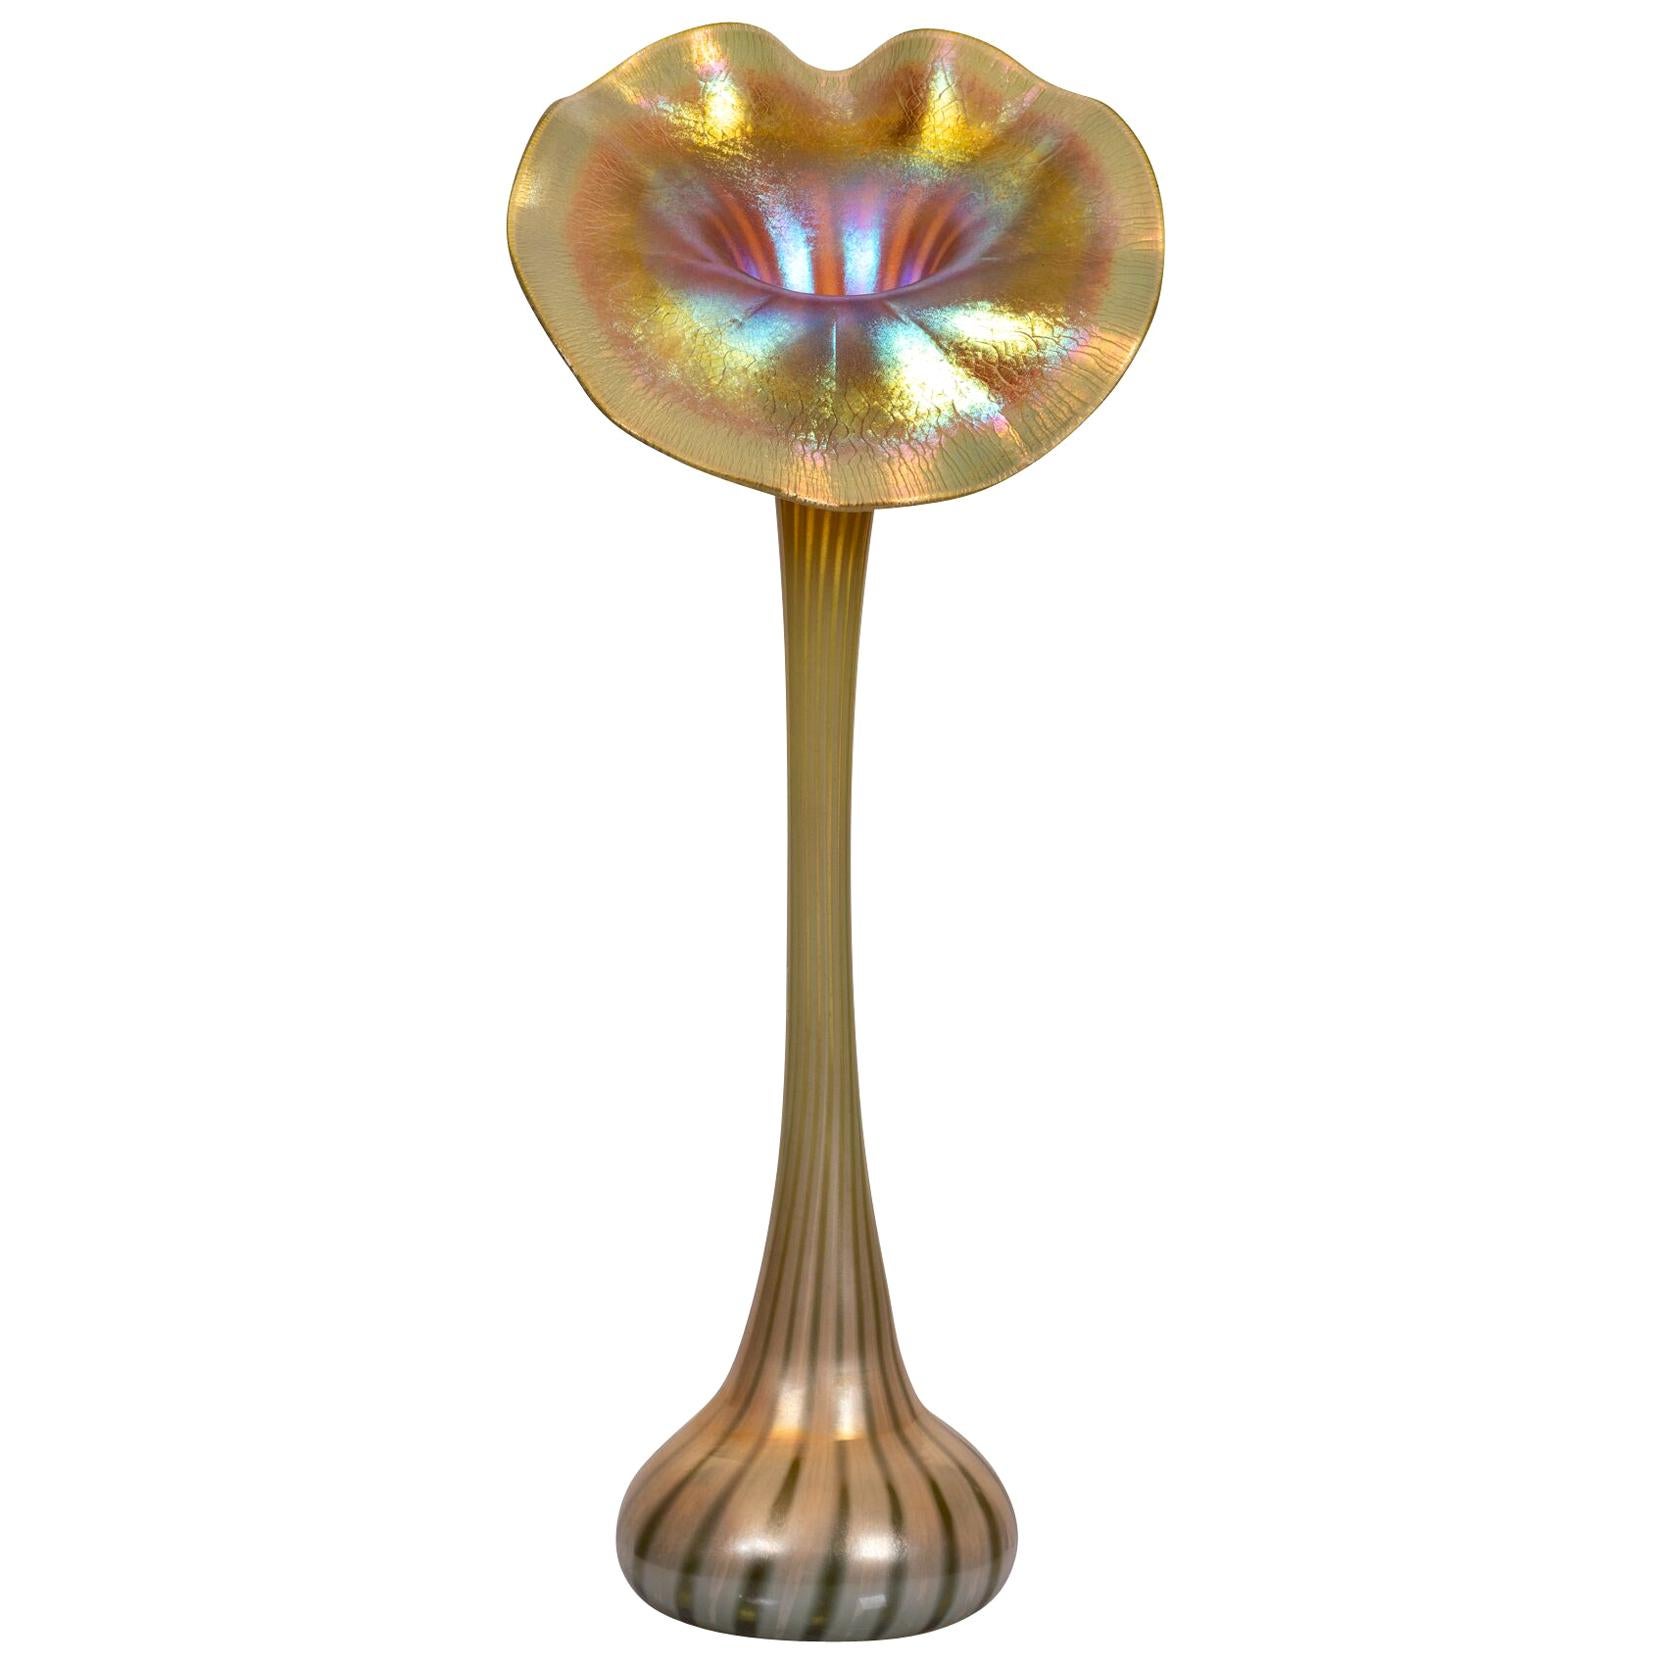 Tiffany Studios "Jack-in-the-pulpit" Flower Form Tiffany Favrile Glass Vase For Sale